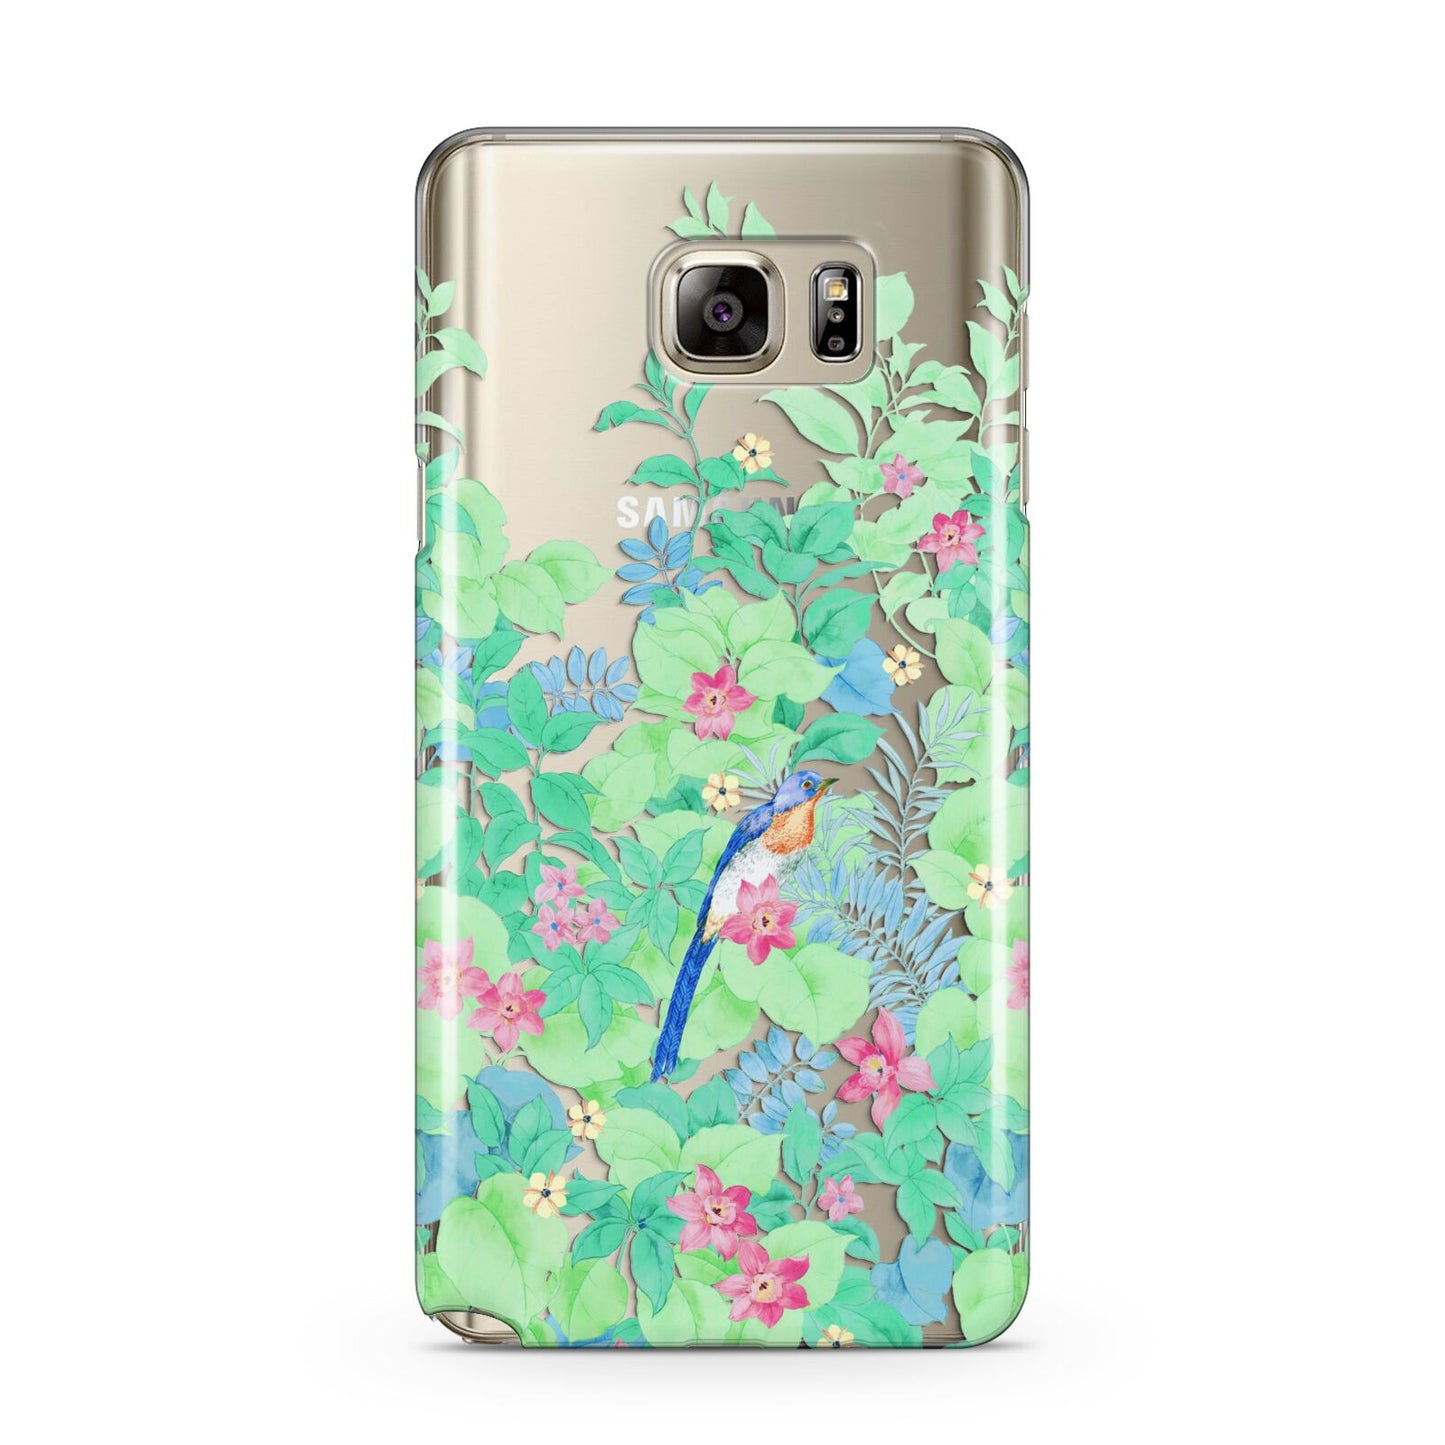 Watercolour Floral Samsung Galaxy Note 5 Case